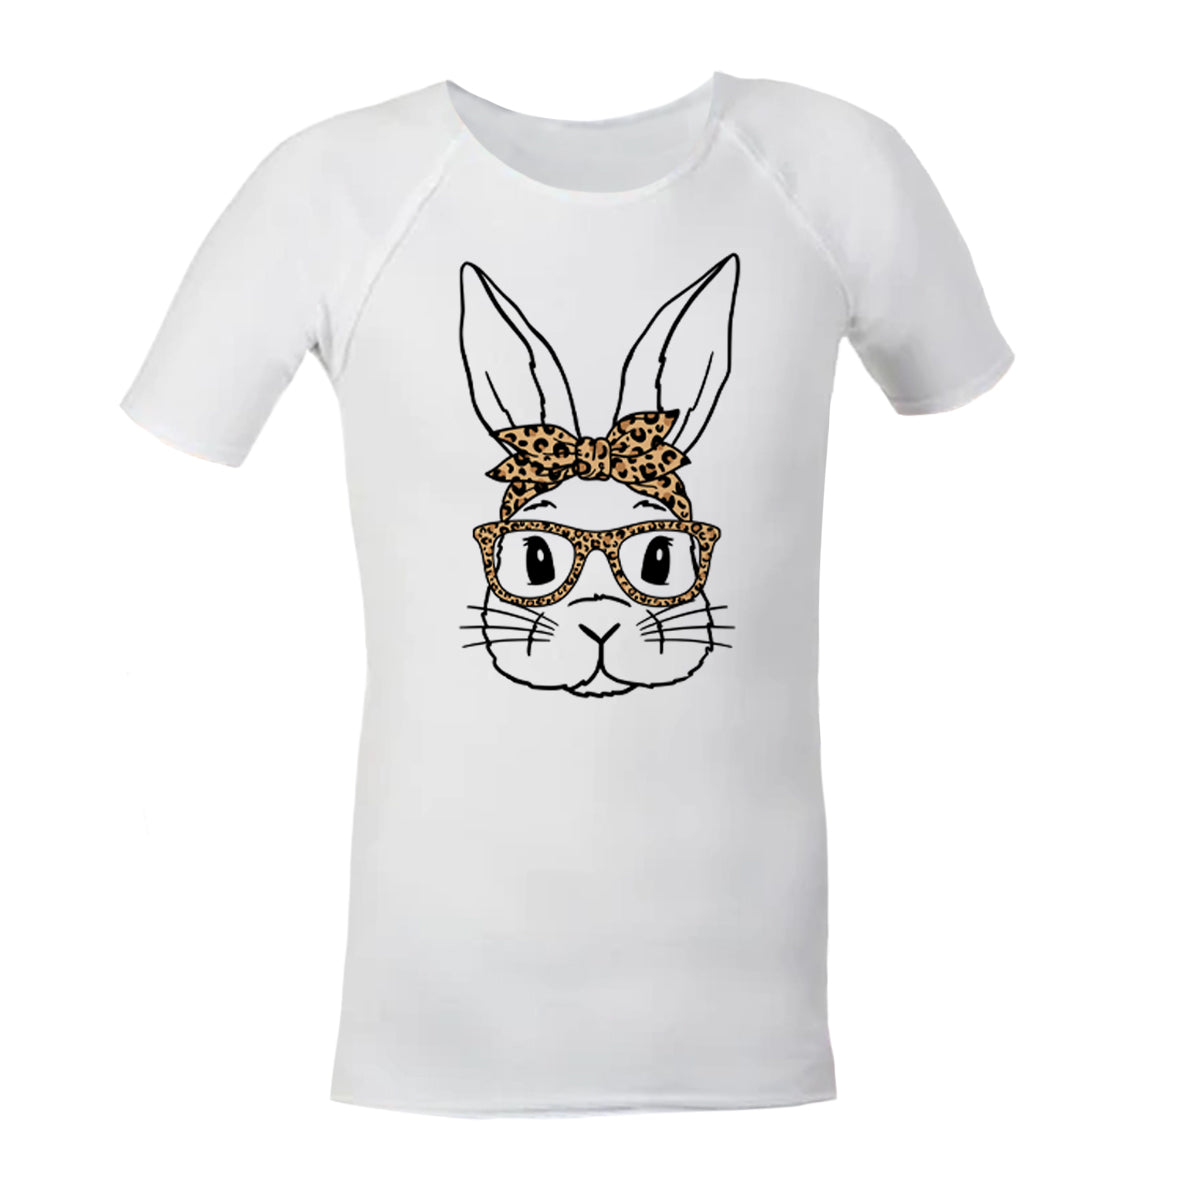 Sensory Shirt | Child | Bunny